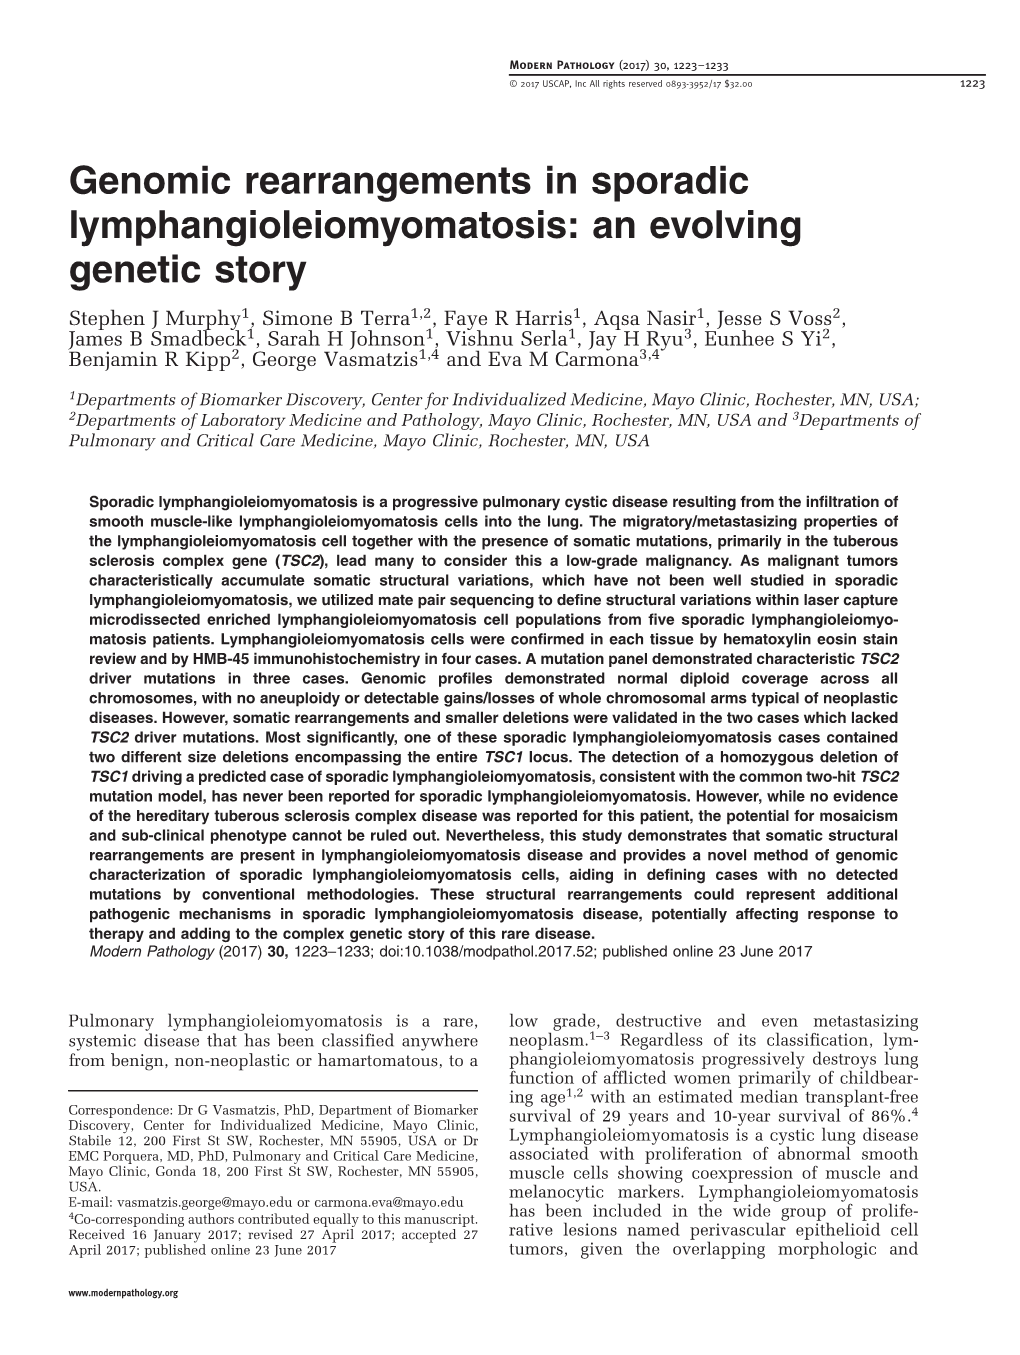 Genomic Rearrangements in Sporadic Lymphangioleiomyomatosis